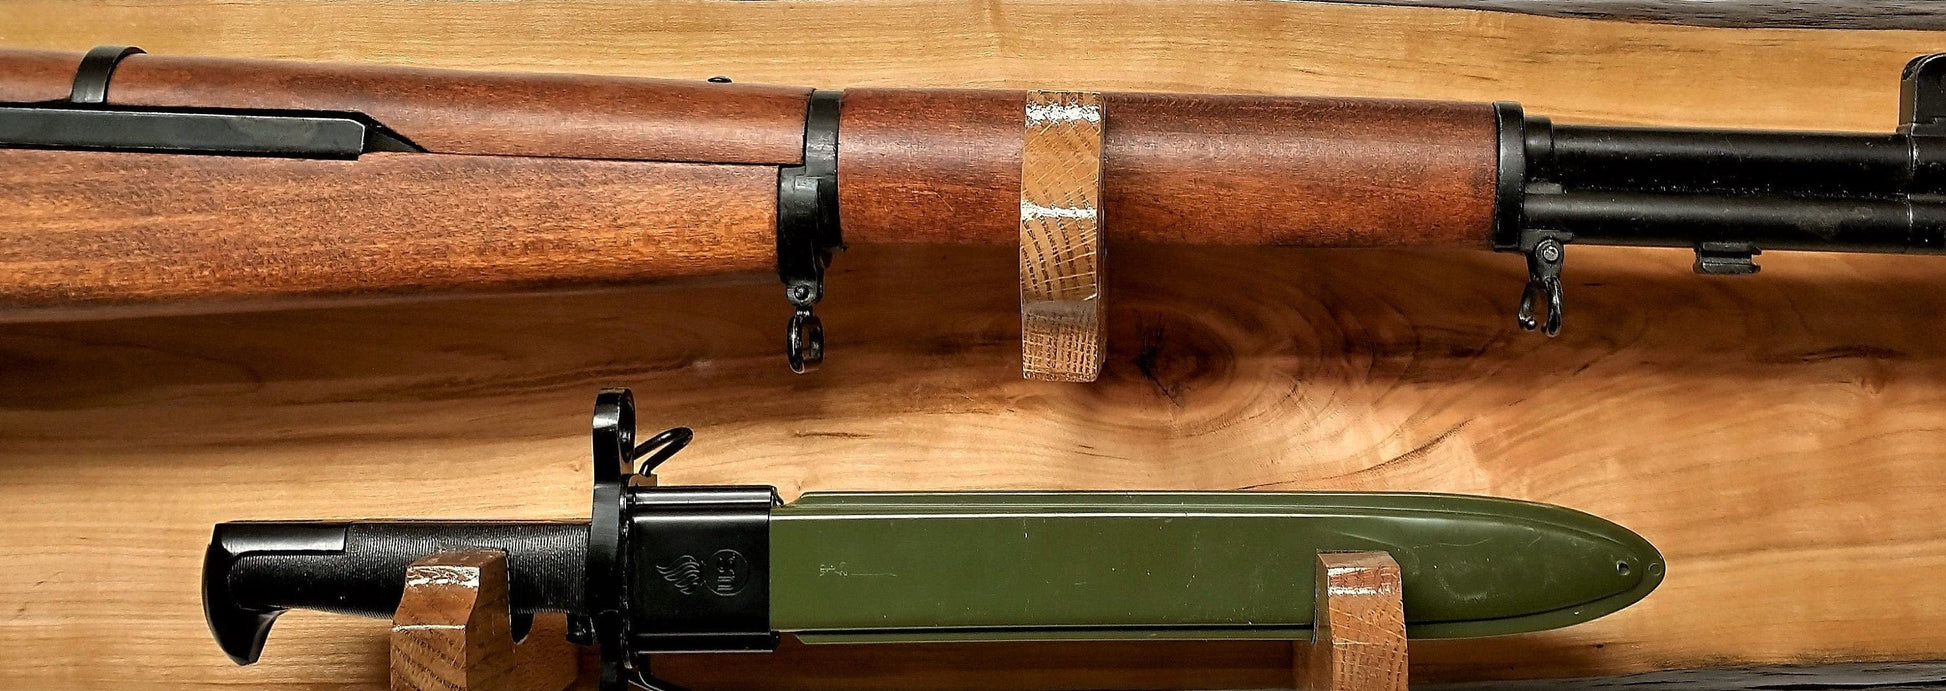 walkerwoodgifts CHERRY M1 MUZZLE Loader Vintage Gun Bayonet Knife Display Collectors Gift